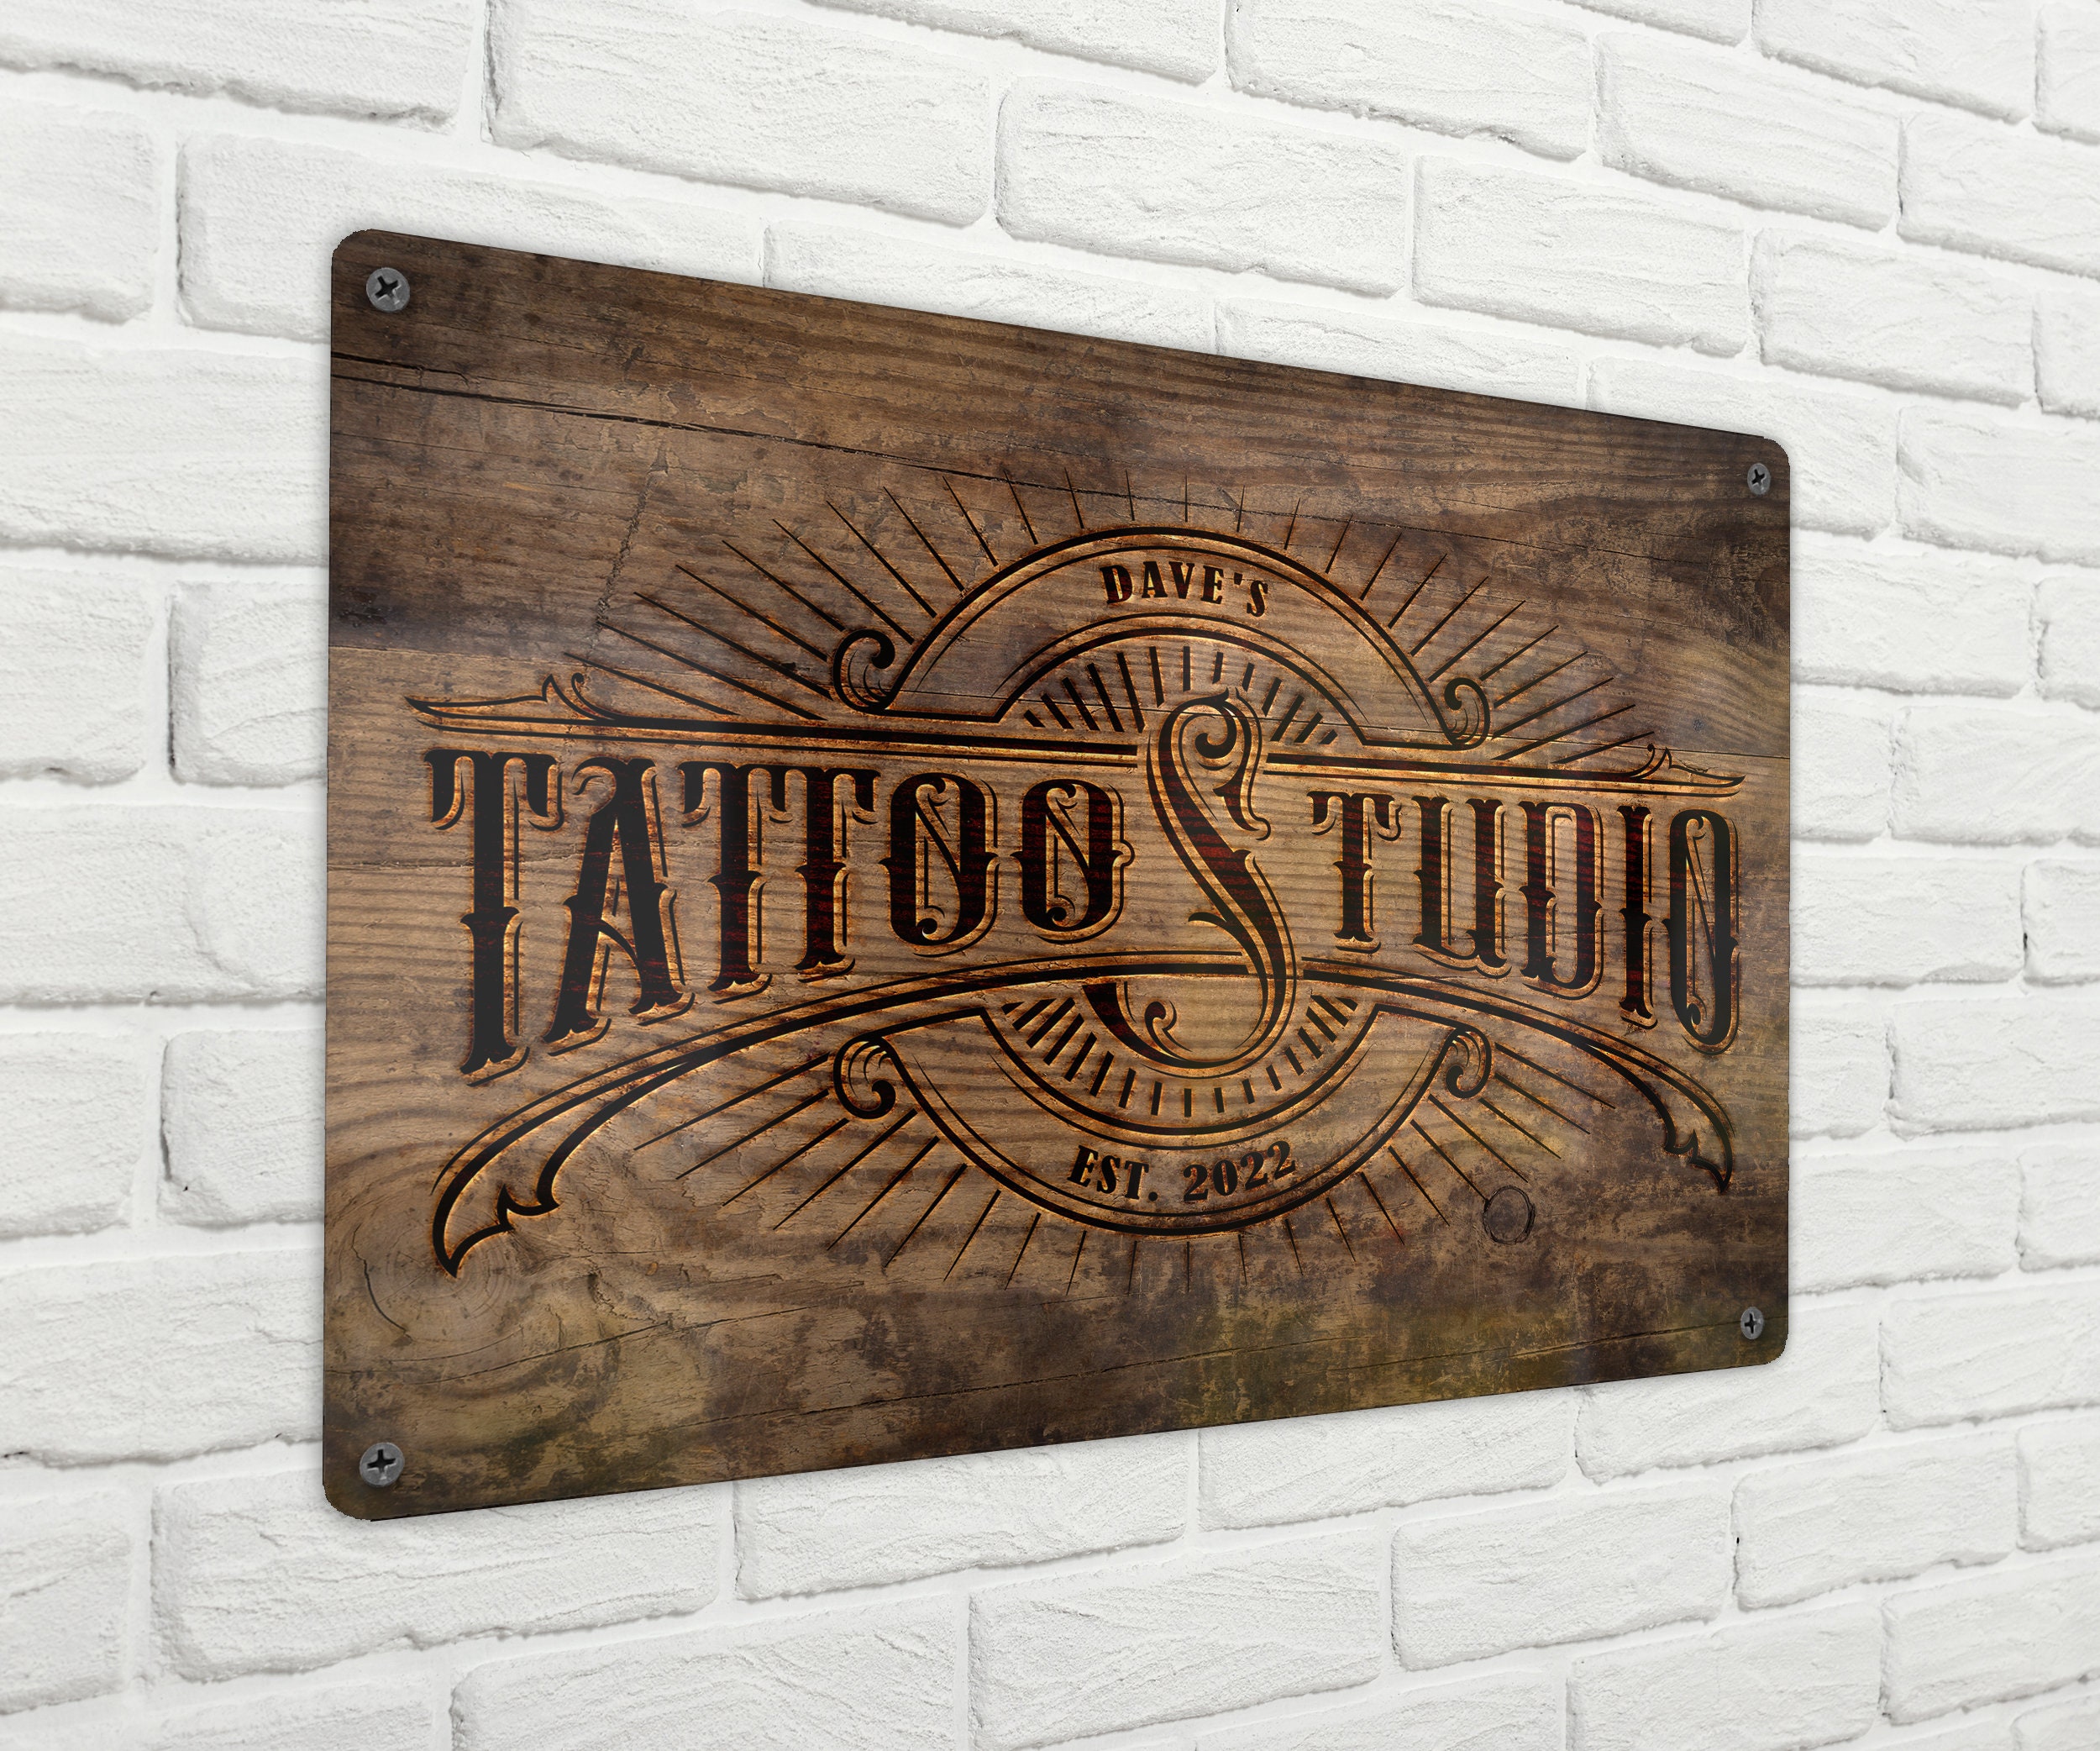 Tattoo Studio A board Swinger 2 Pavement Sign Outdoor Street Advertising  Aboard | eBay